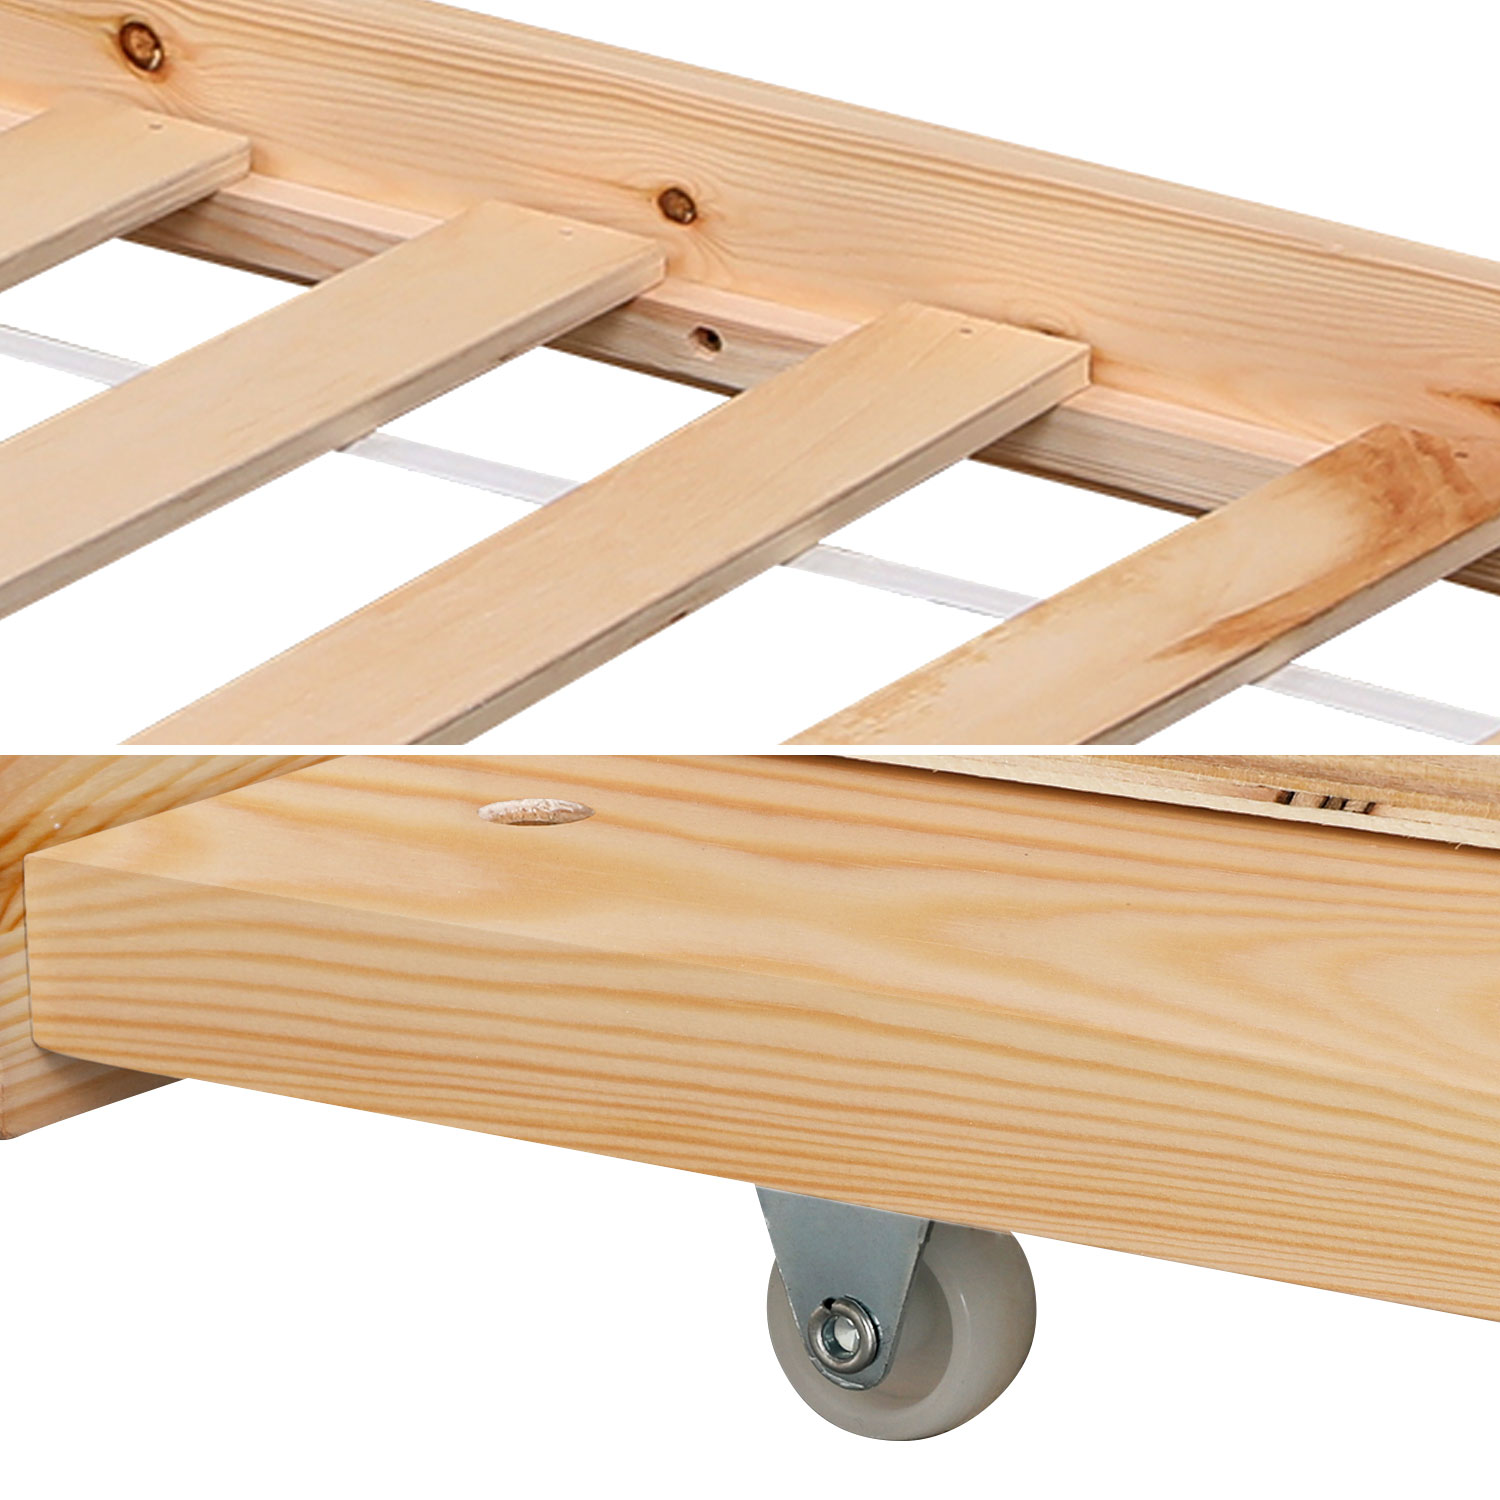 Cajón-cama de madera MARCEAU